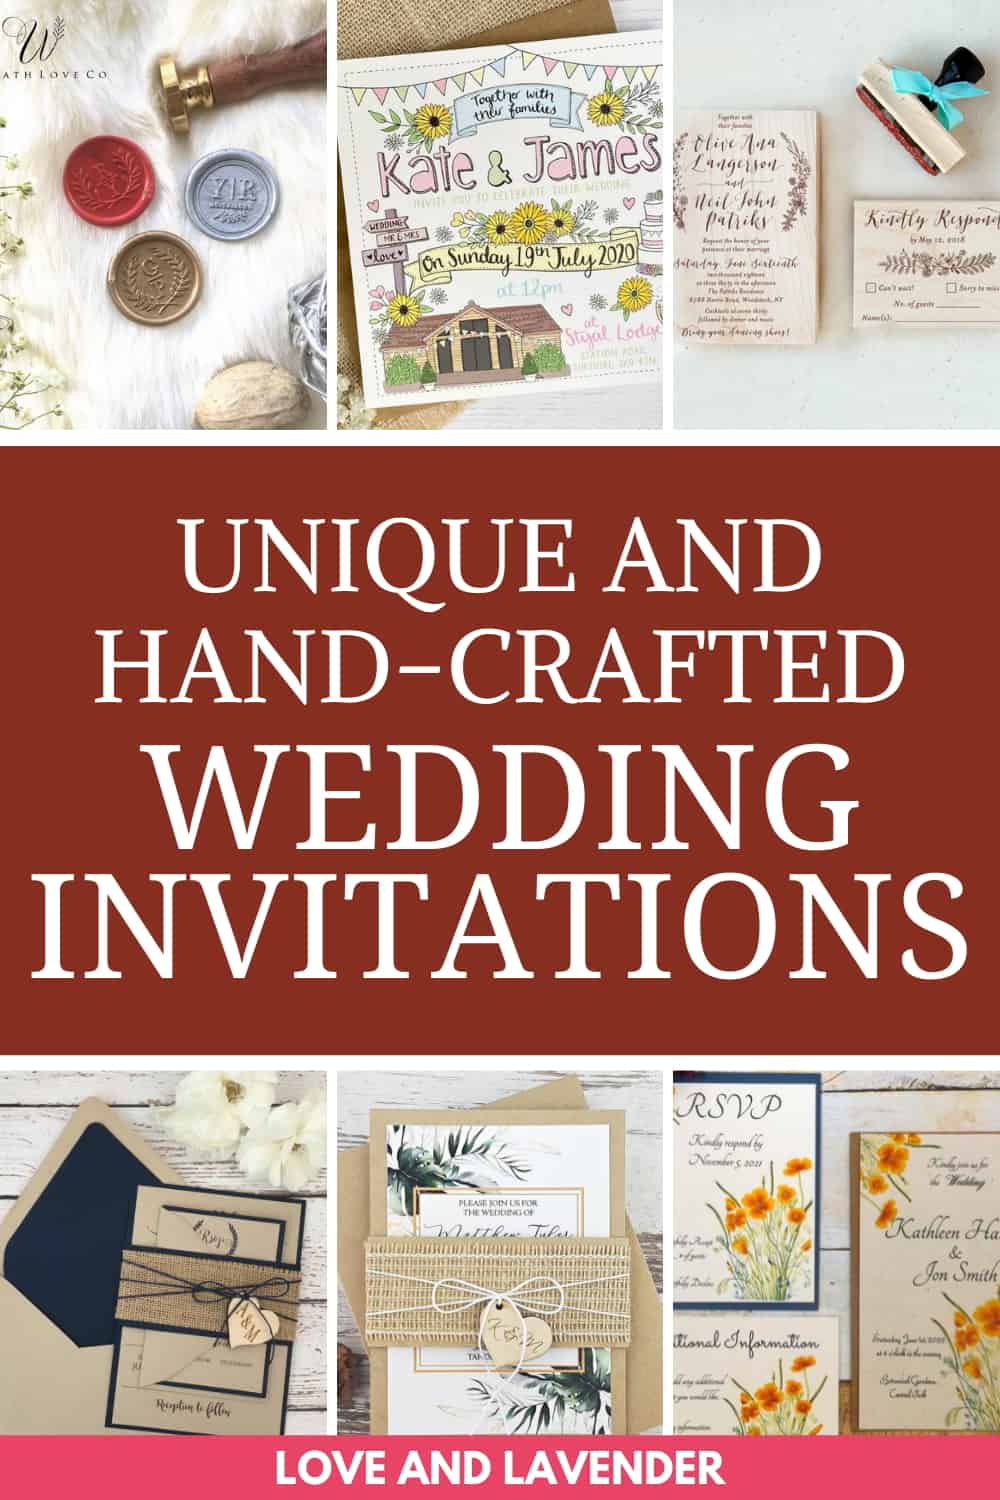 11 Handmade Wedding Invitations We Absolutely Adore!